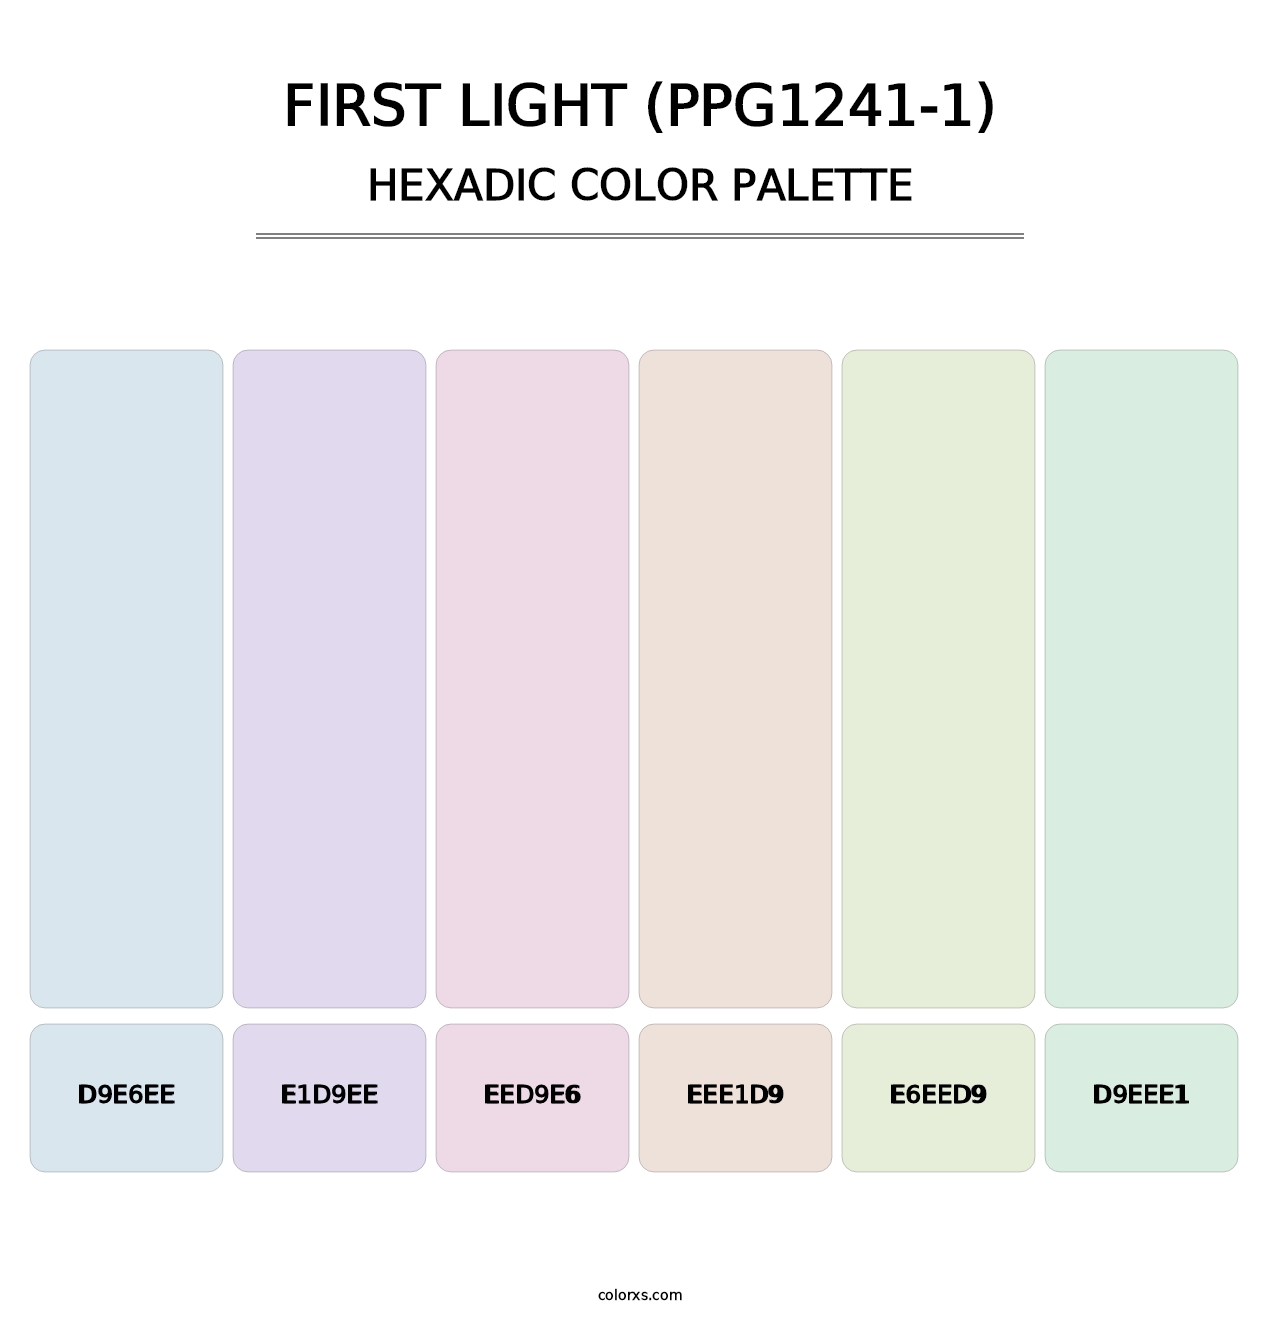 First Light (PPG1241-1) - Hexadic Color Palette